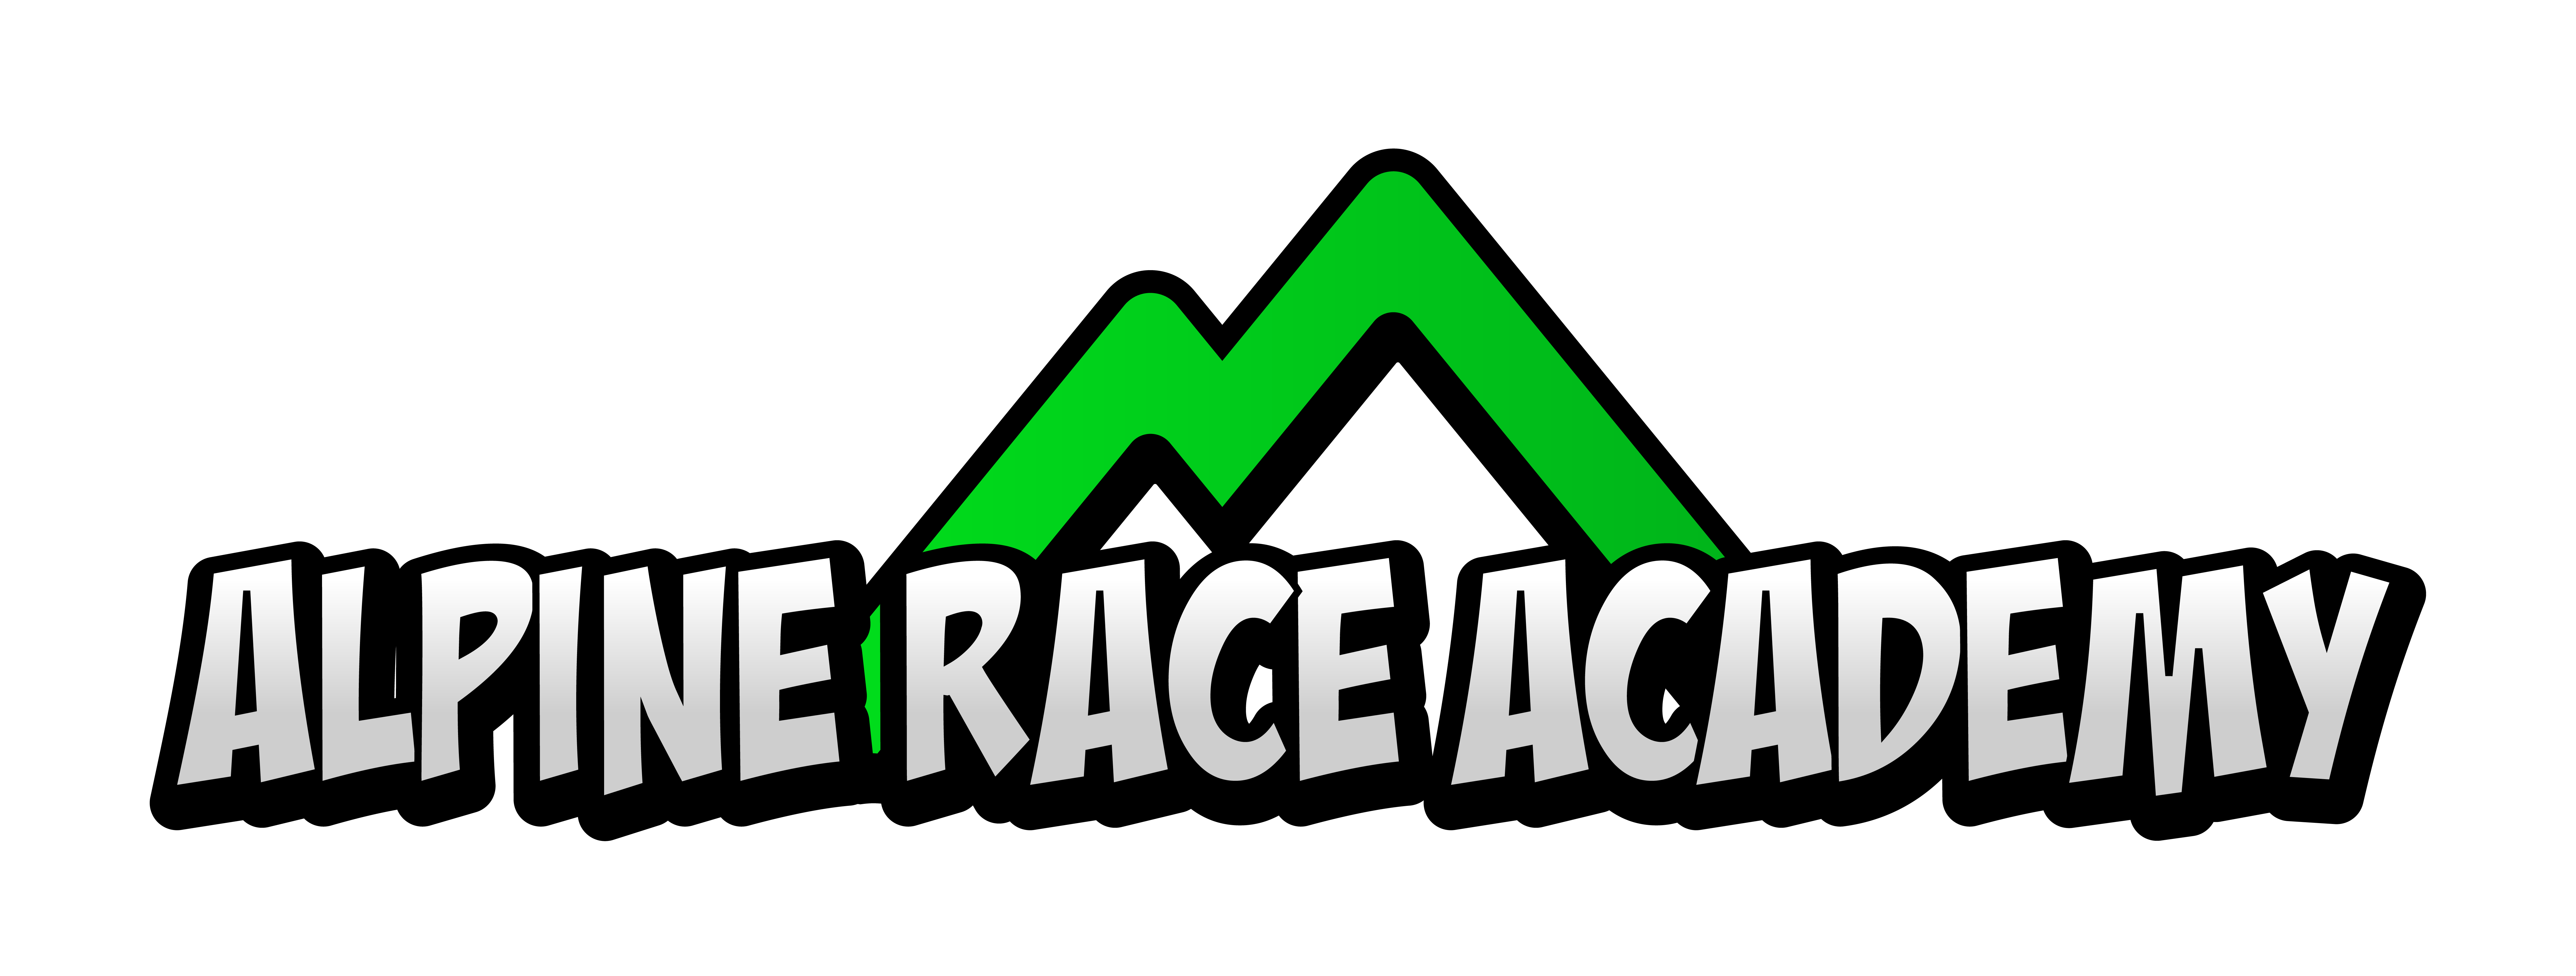 Alpine Race Academy